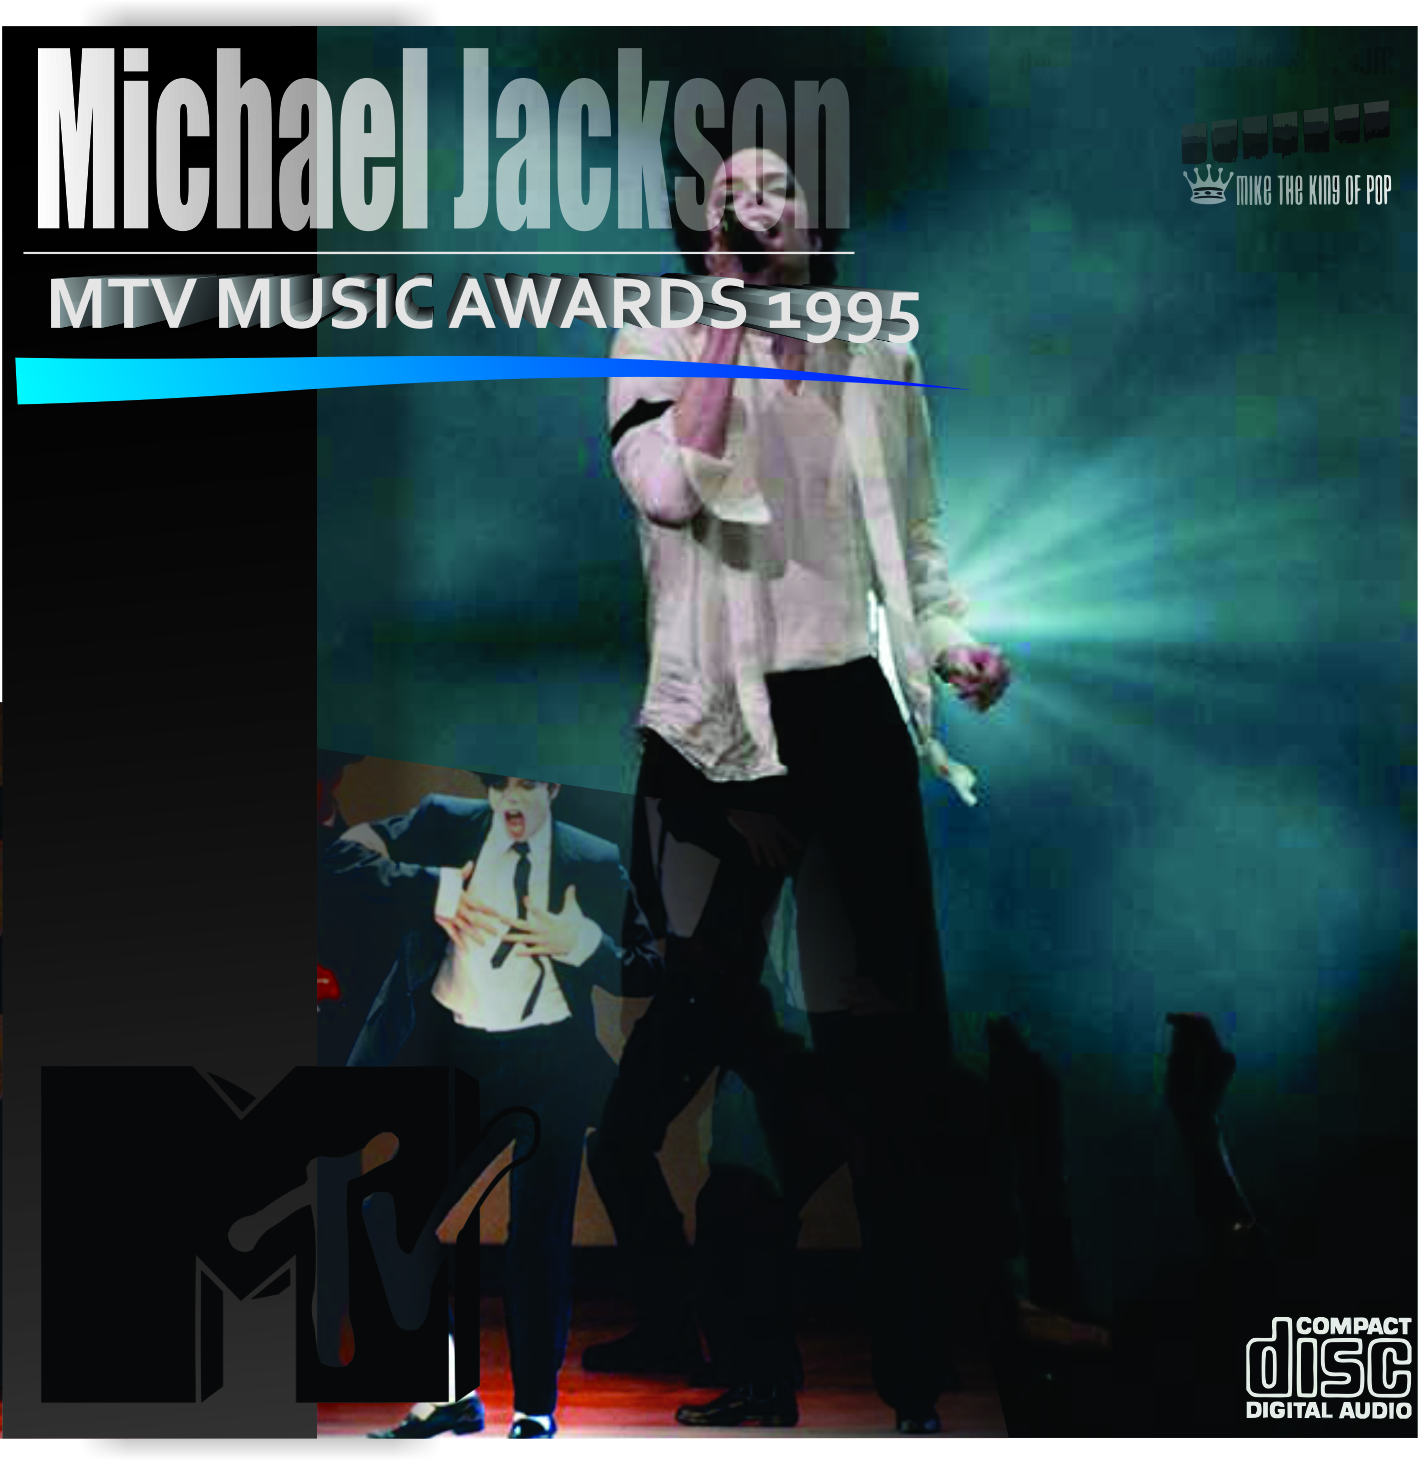 http://1.bp.blogspot.com/-o_bMlE0oeUk/Tzwq-kqgL6I/AAAAAAAAAmY/uRg2Pxx8ujE/s1600/Capa+-+CD+Michael+Jackson+Live+In+MTV+Music+Awards+1995.jpg